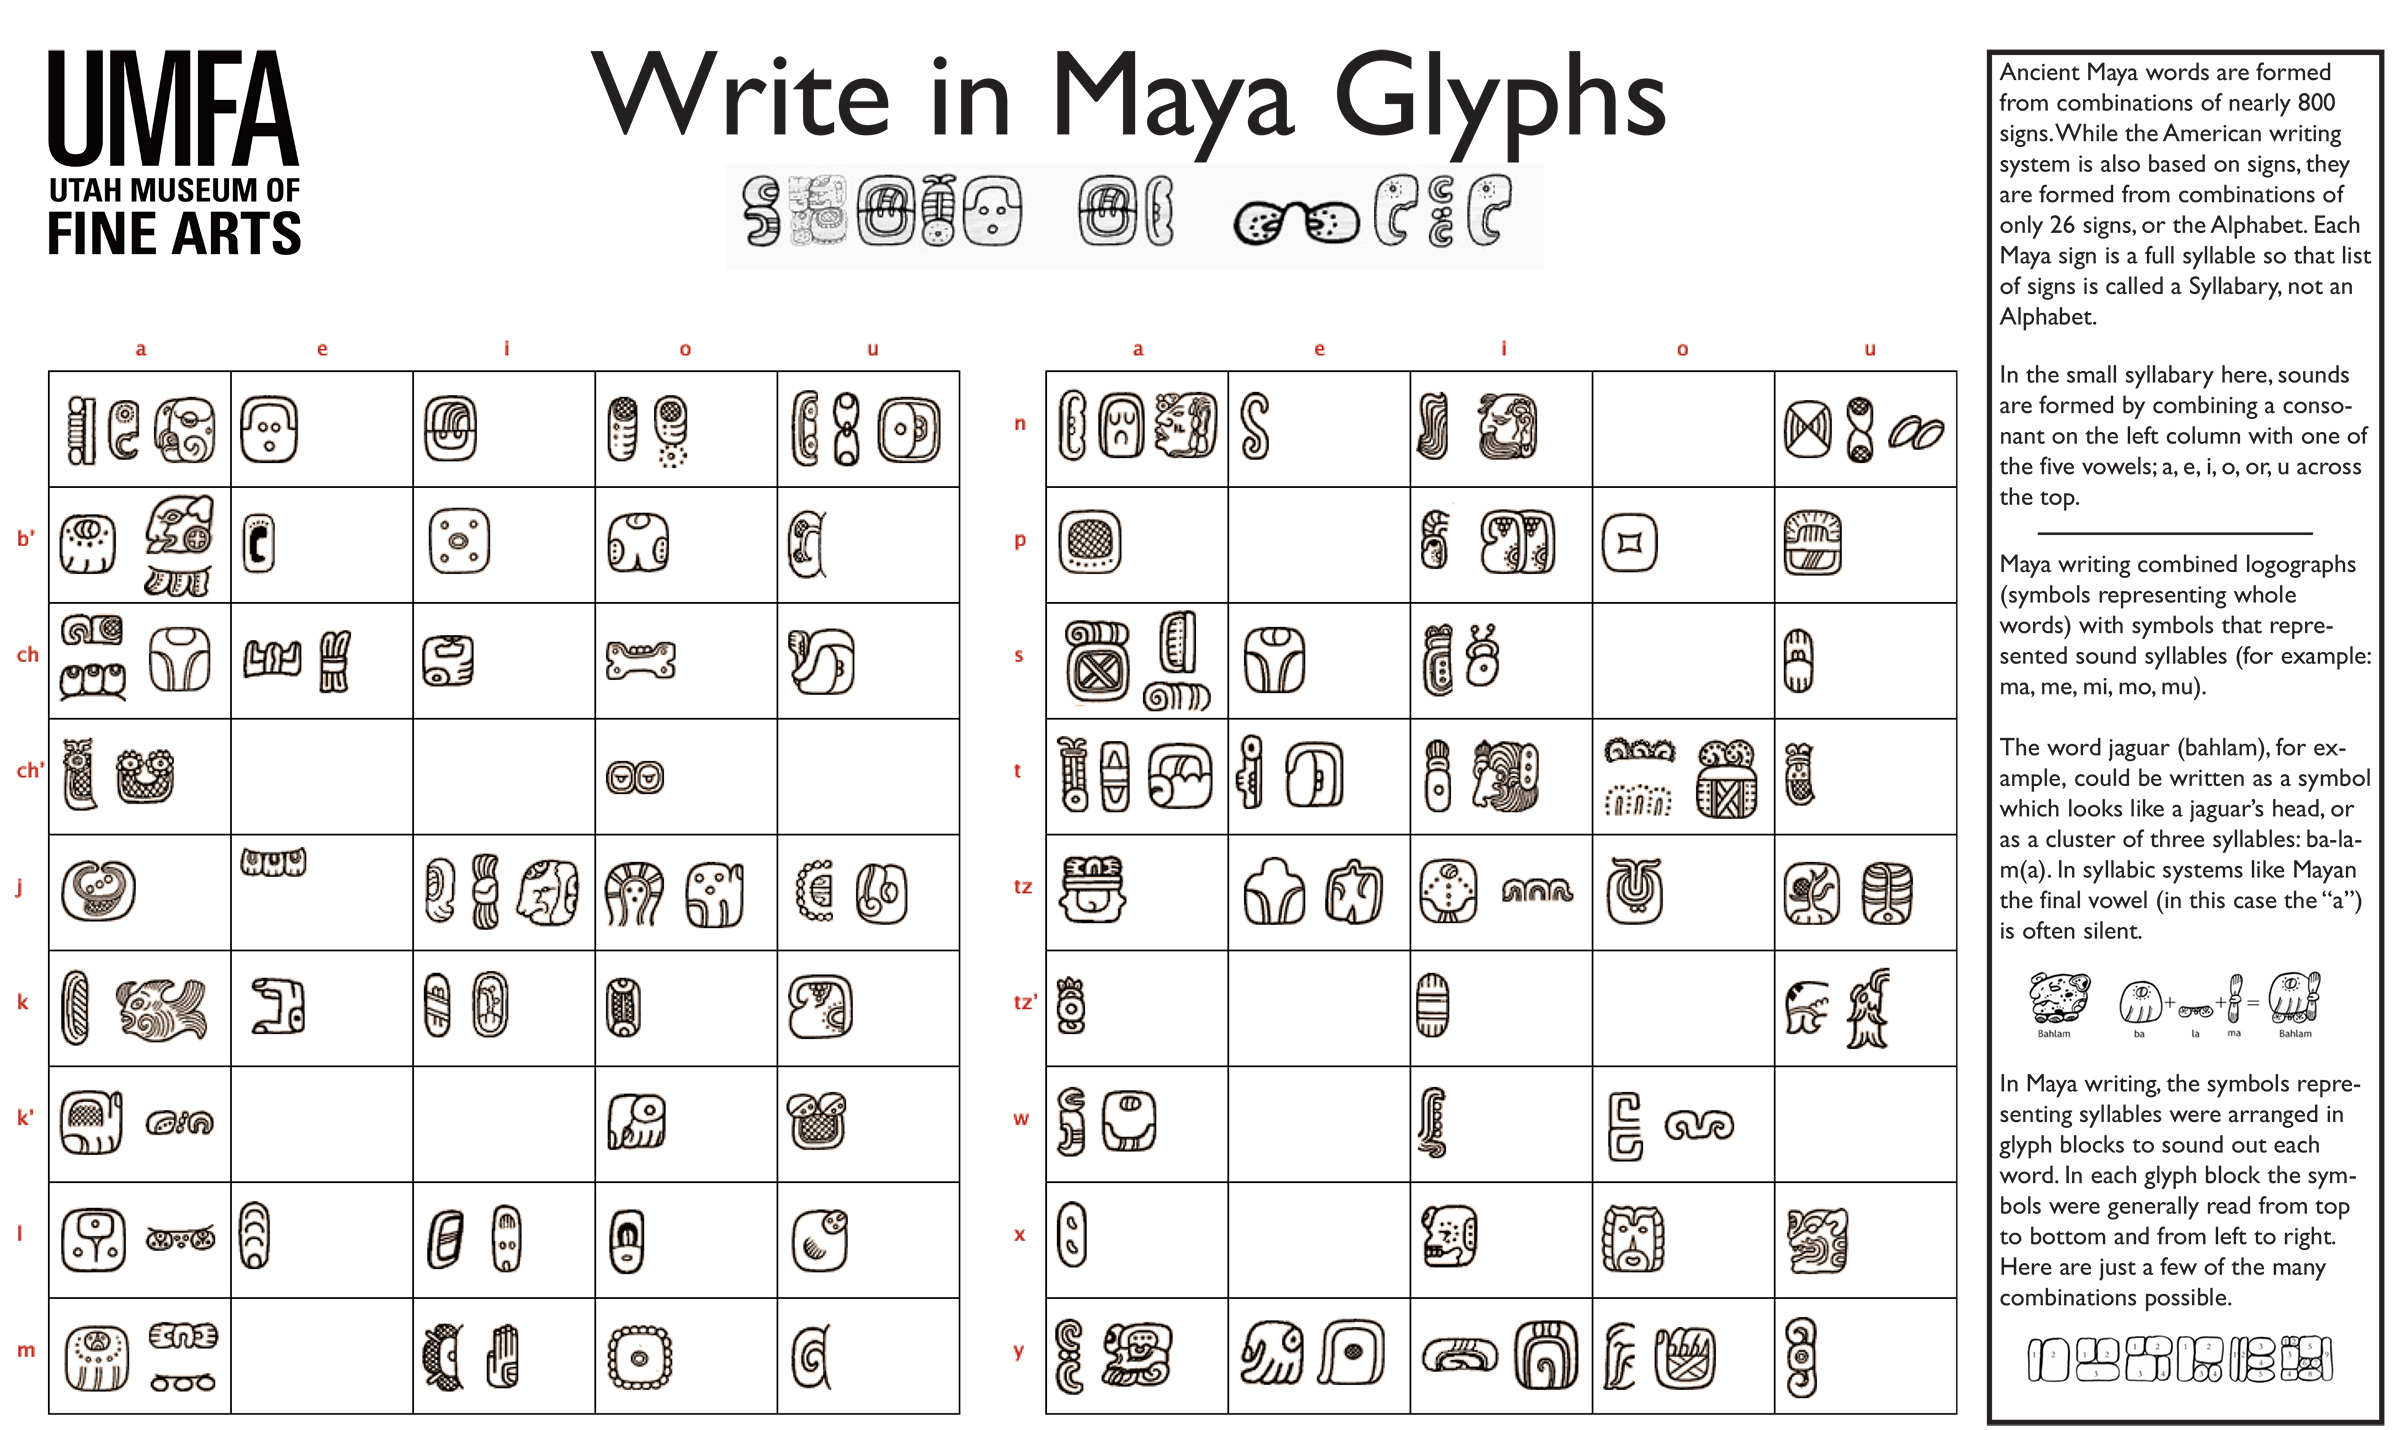 mayan glyphs english meaning